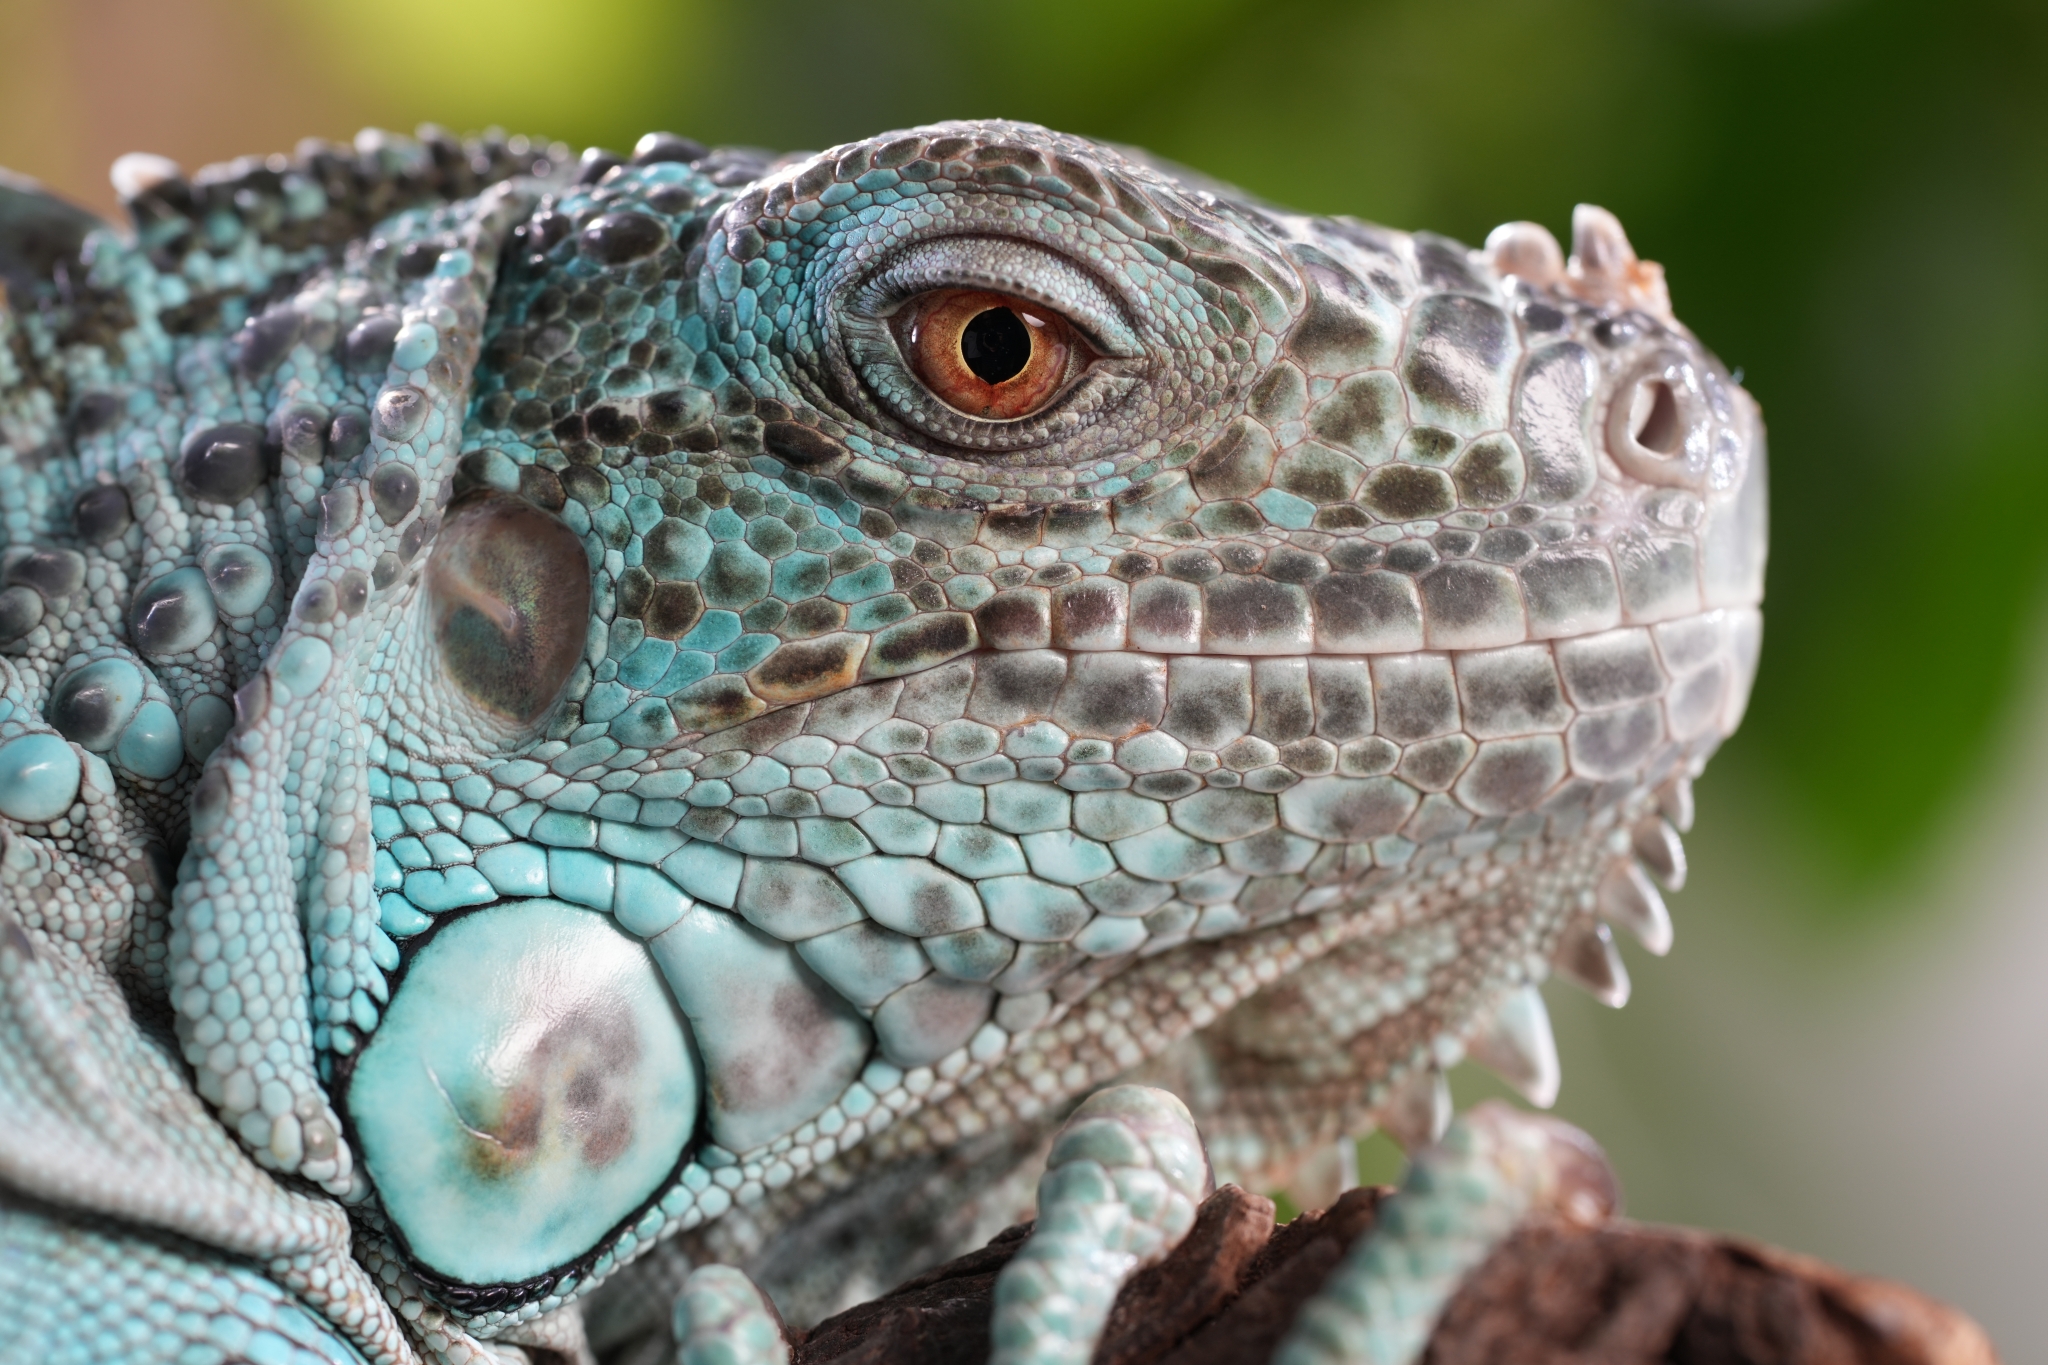 Close-up of a lizard's head